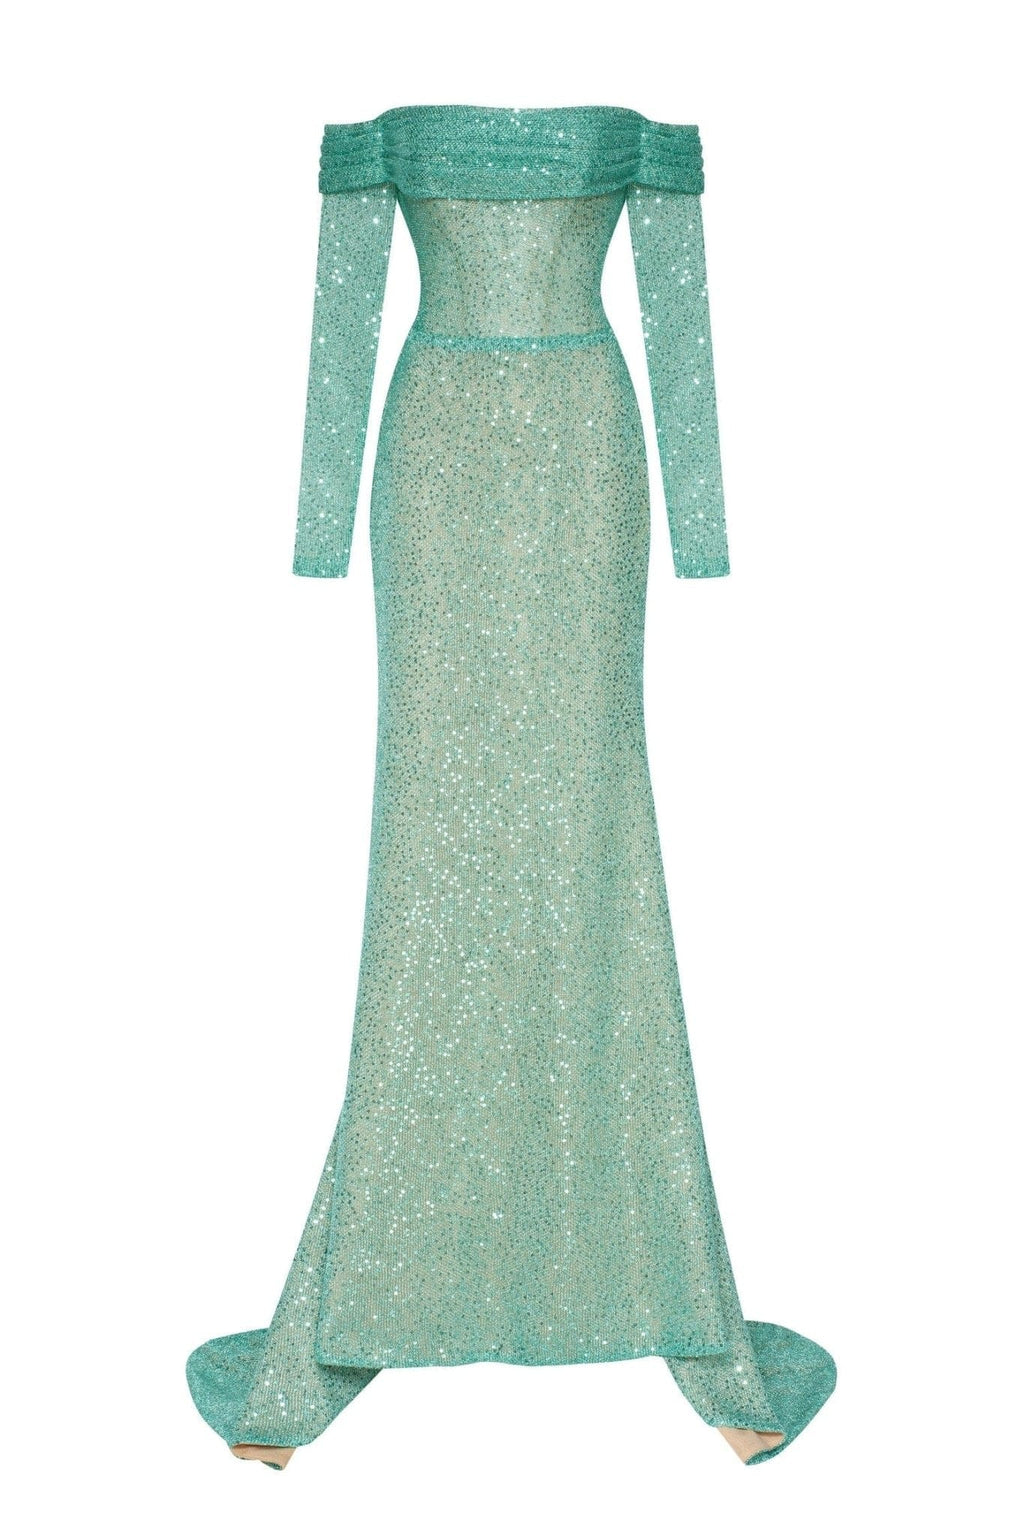 Mint Green Romantic off-the-shoulder sparkling long dress - Milla